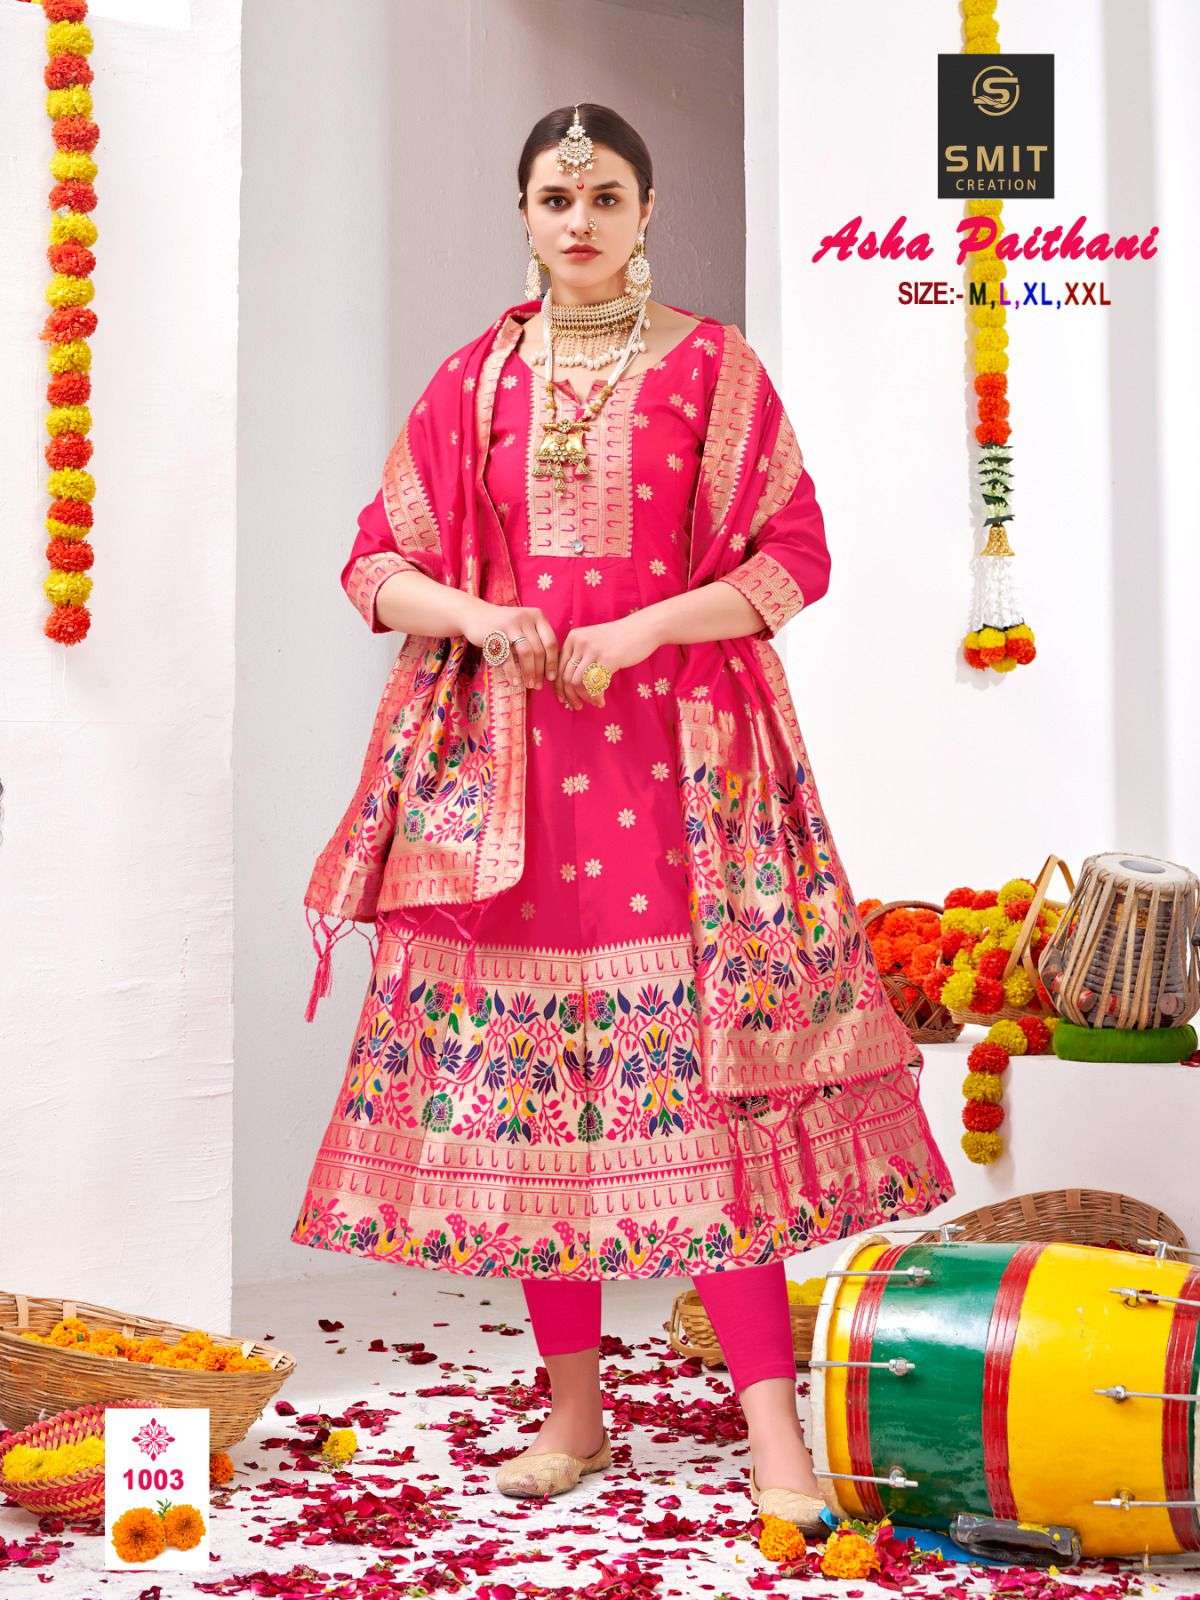 smit creation asha paithani 1001-1006 series stylish designer paithani gown with dupatta latest catalogue surat 